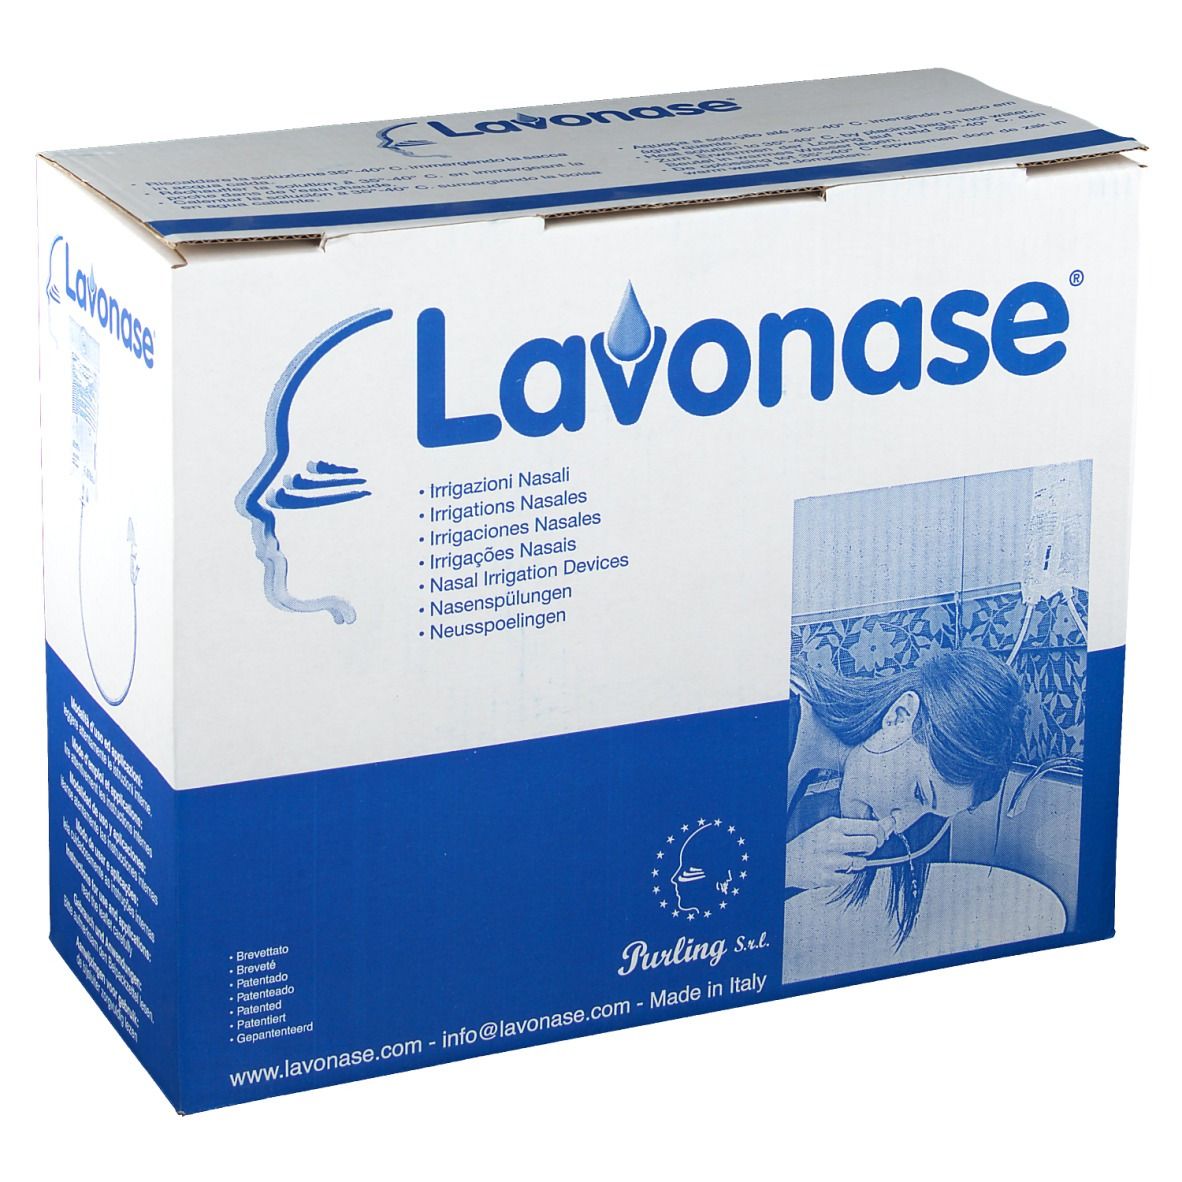 Image of Lavonase® Irrigazione Nasale